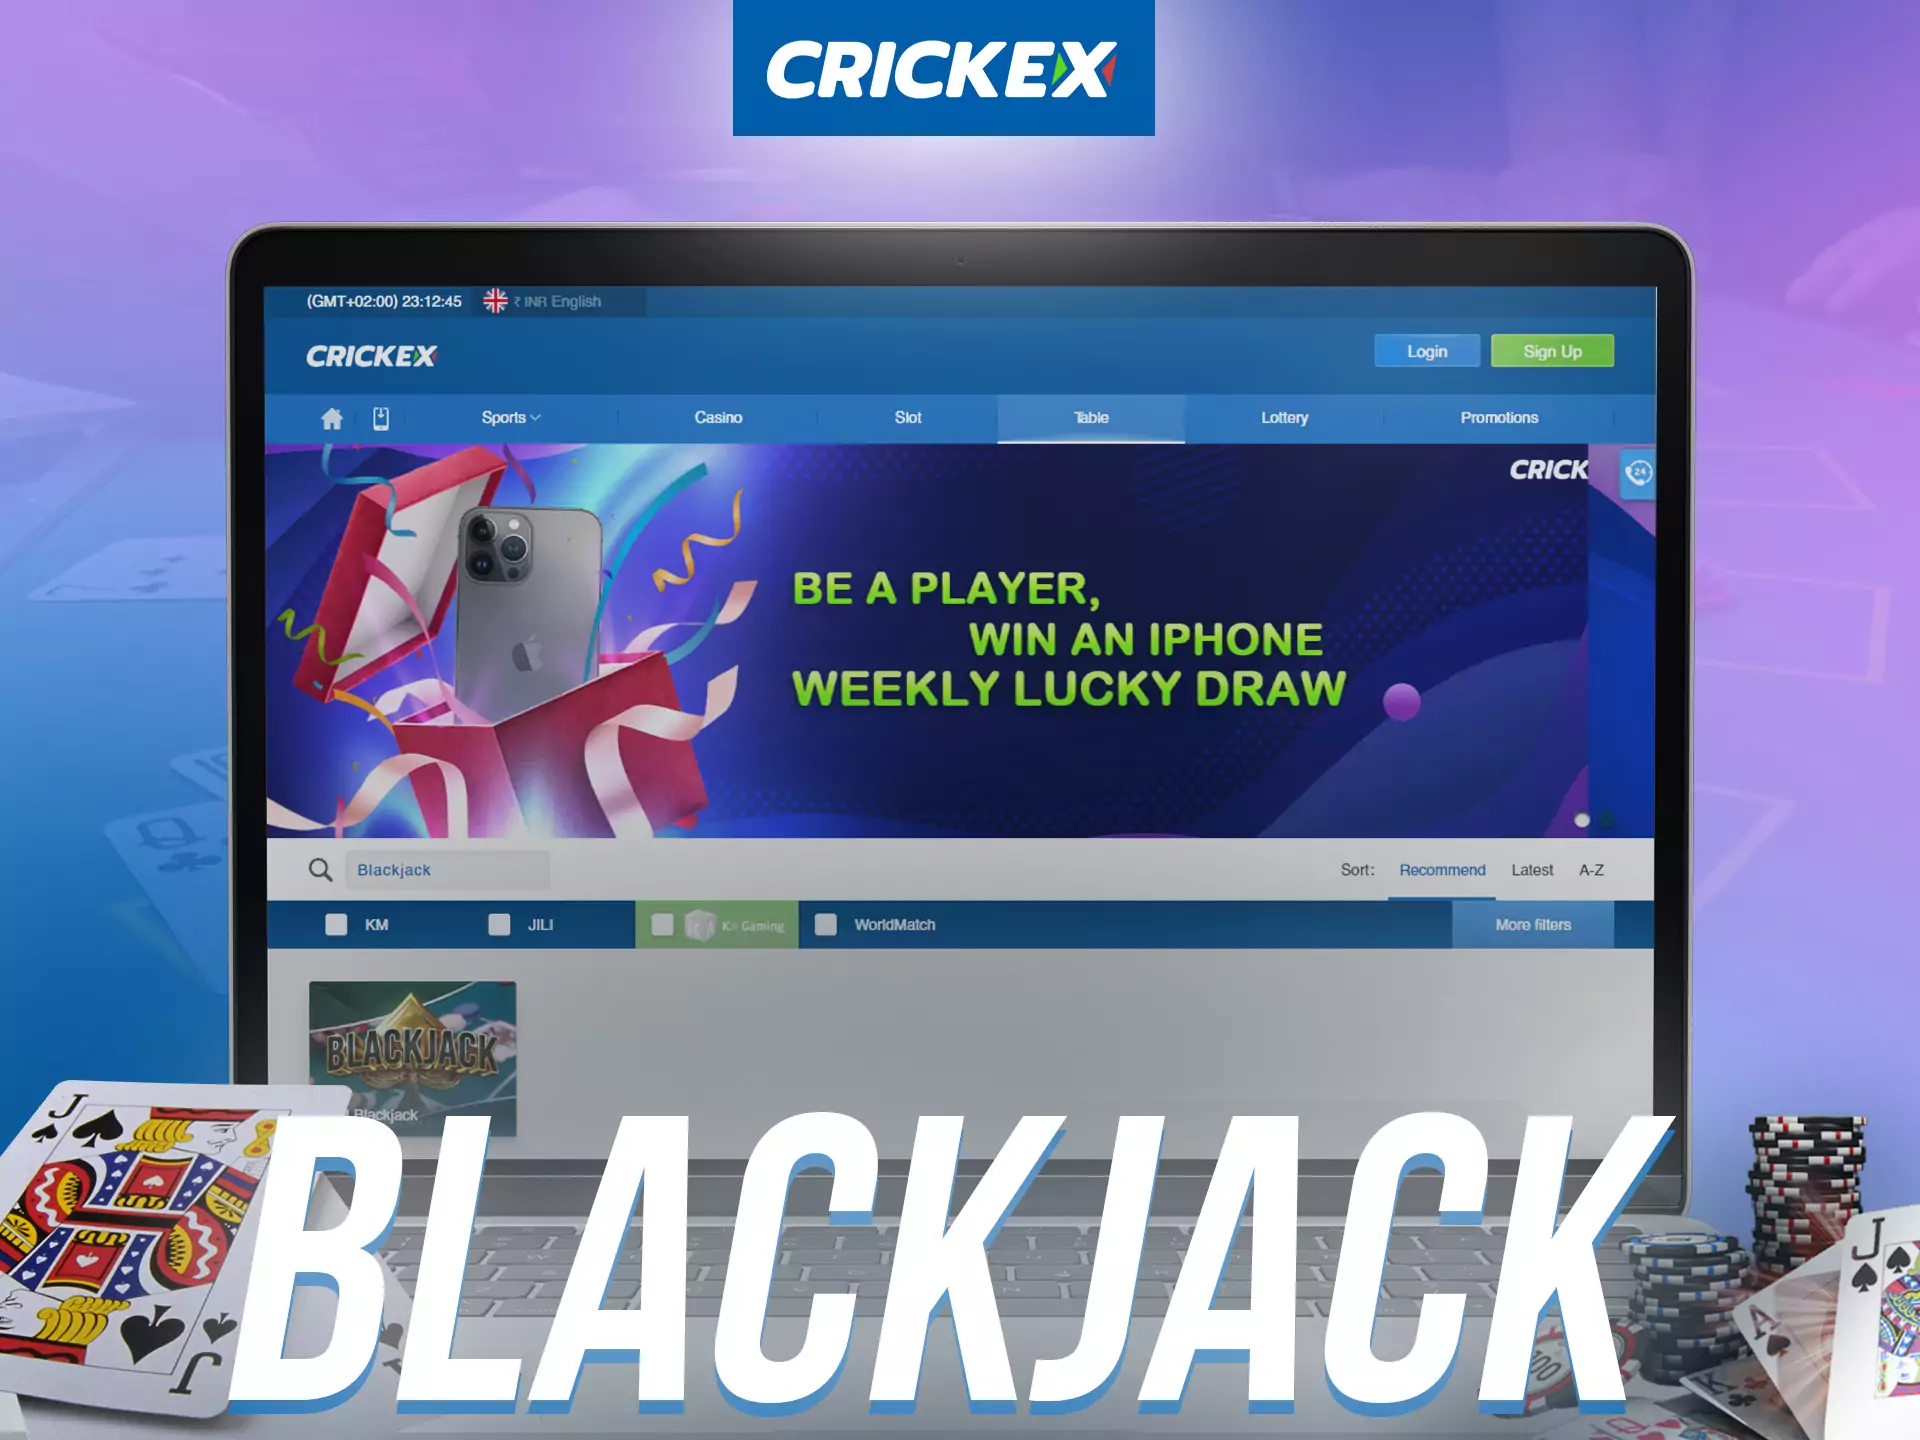 On Crickex if you like card games, play blackjack.